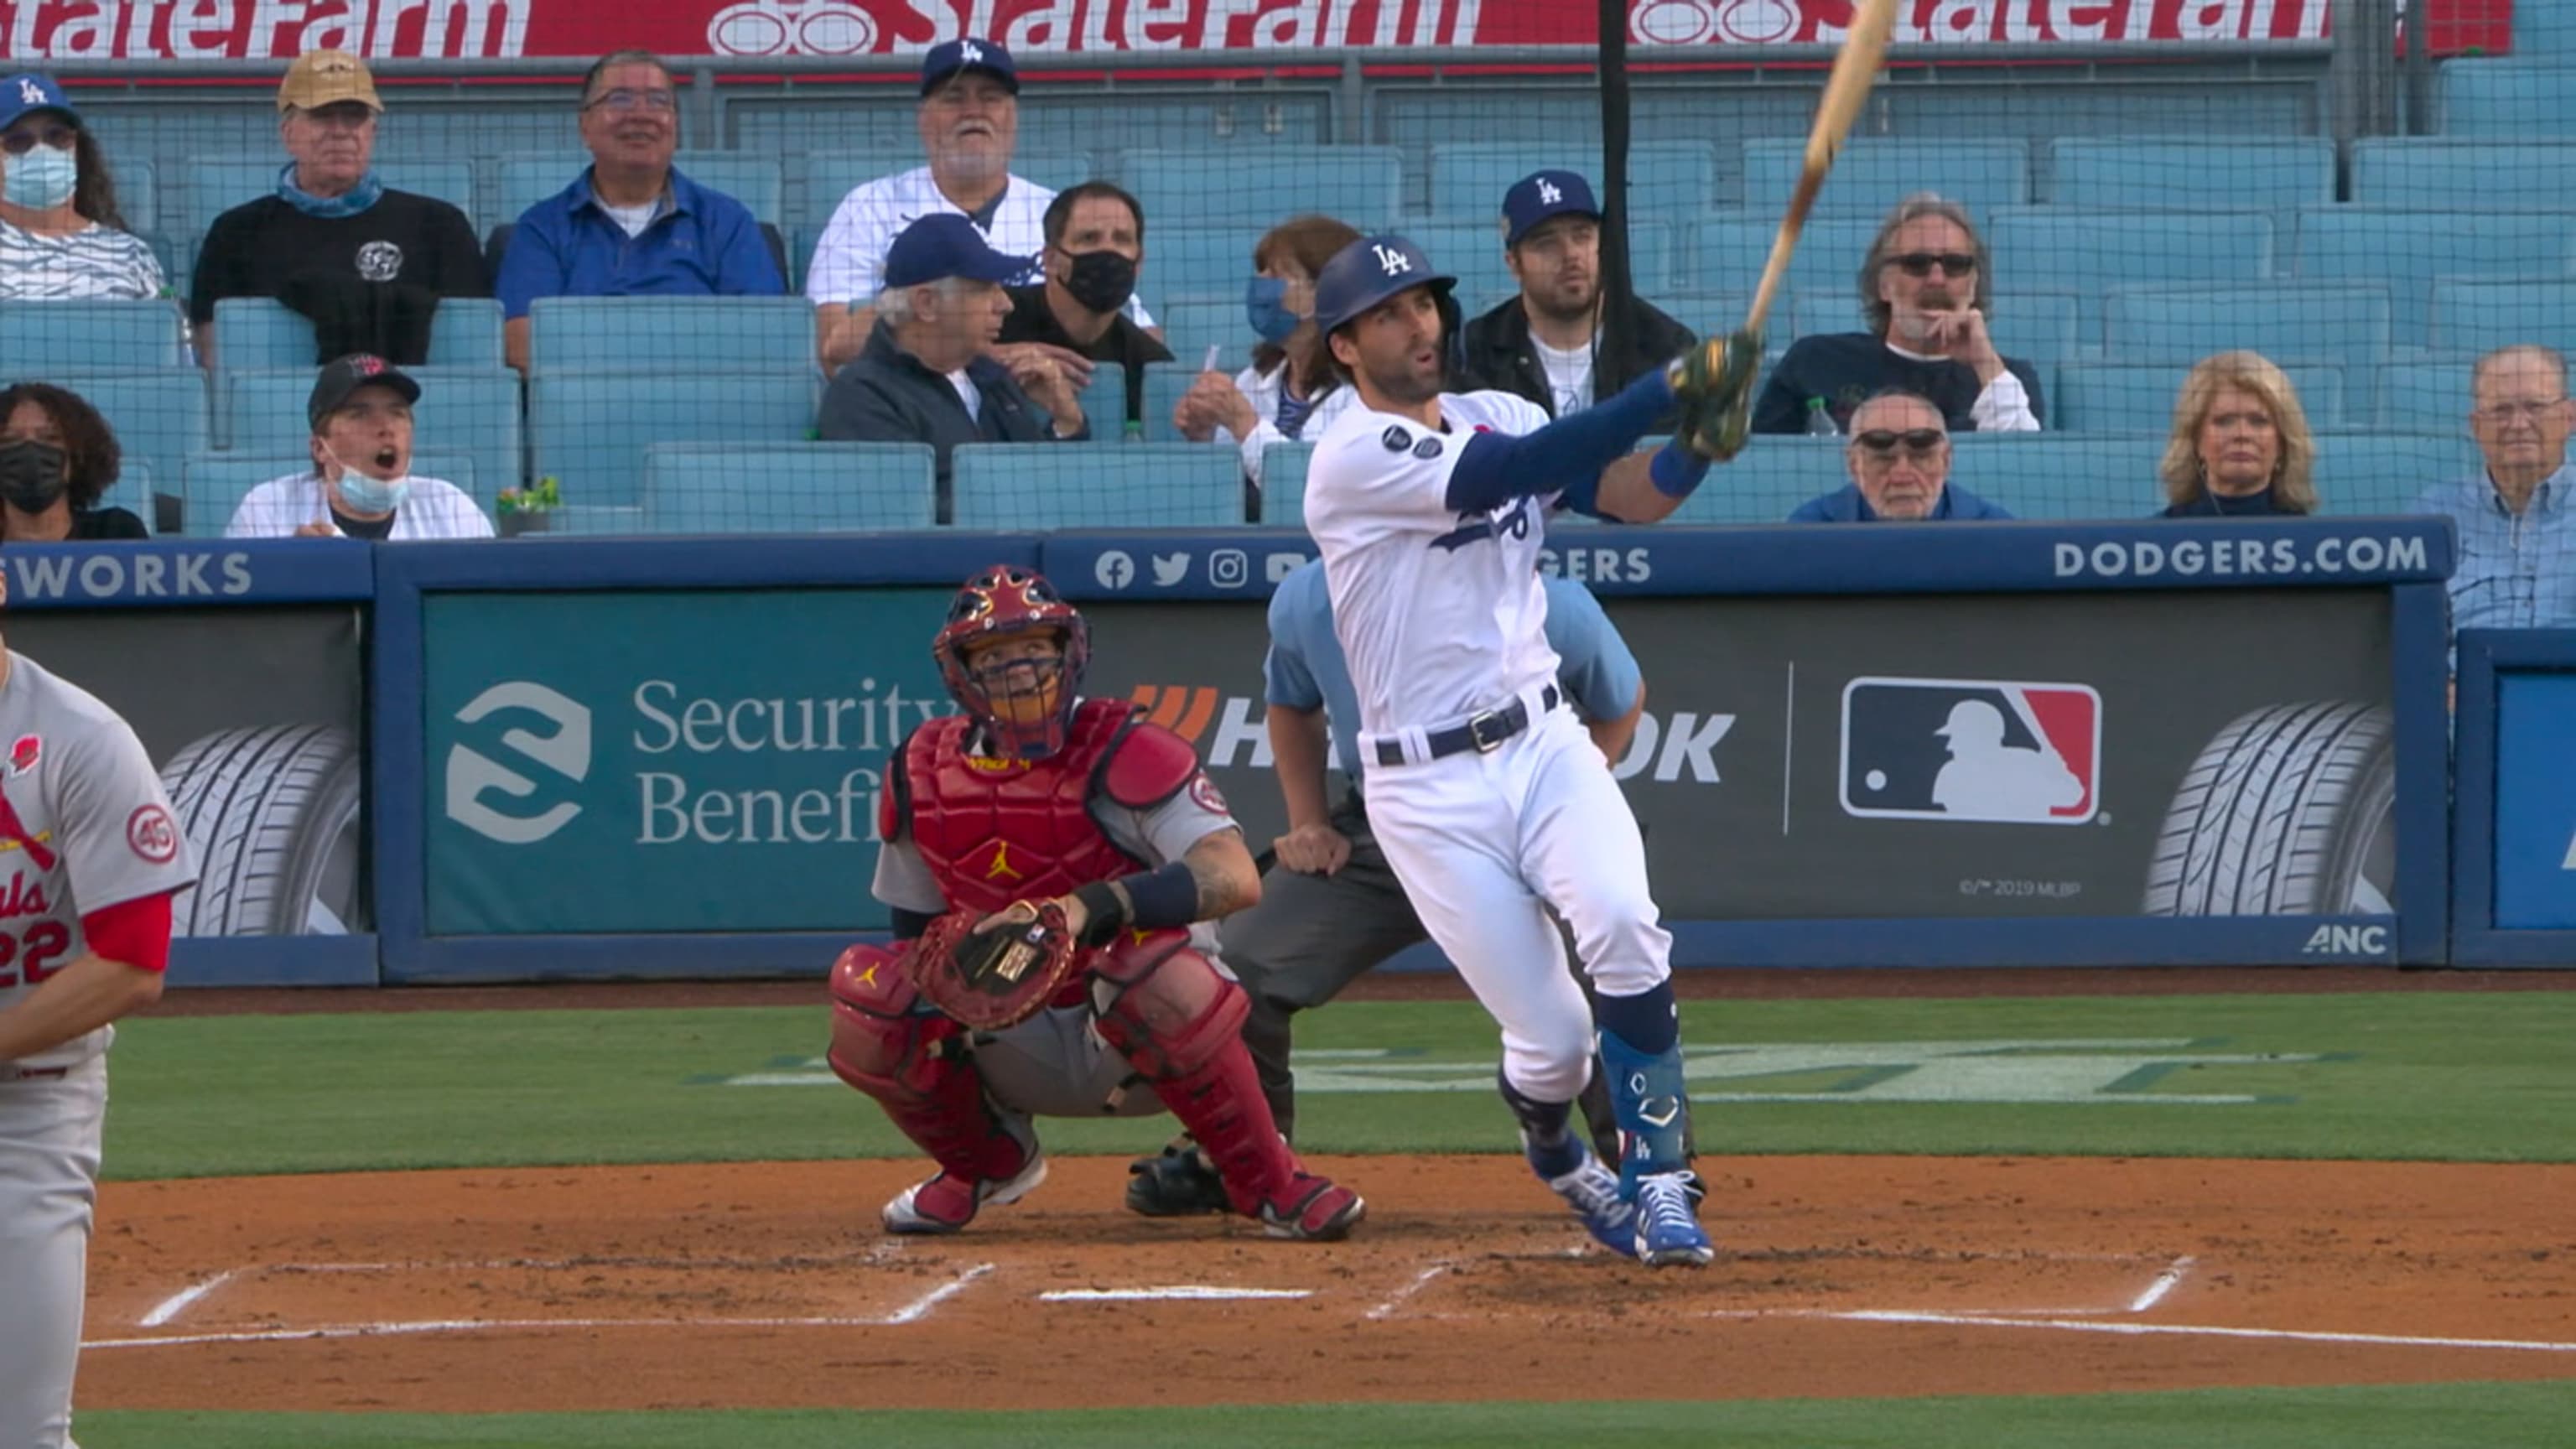 EPIC 14-pitch at-bat!! Dodgers' Chris Taylor gets 3-run double